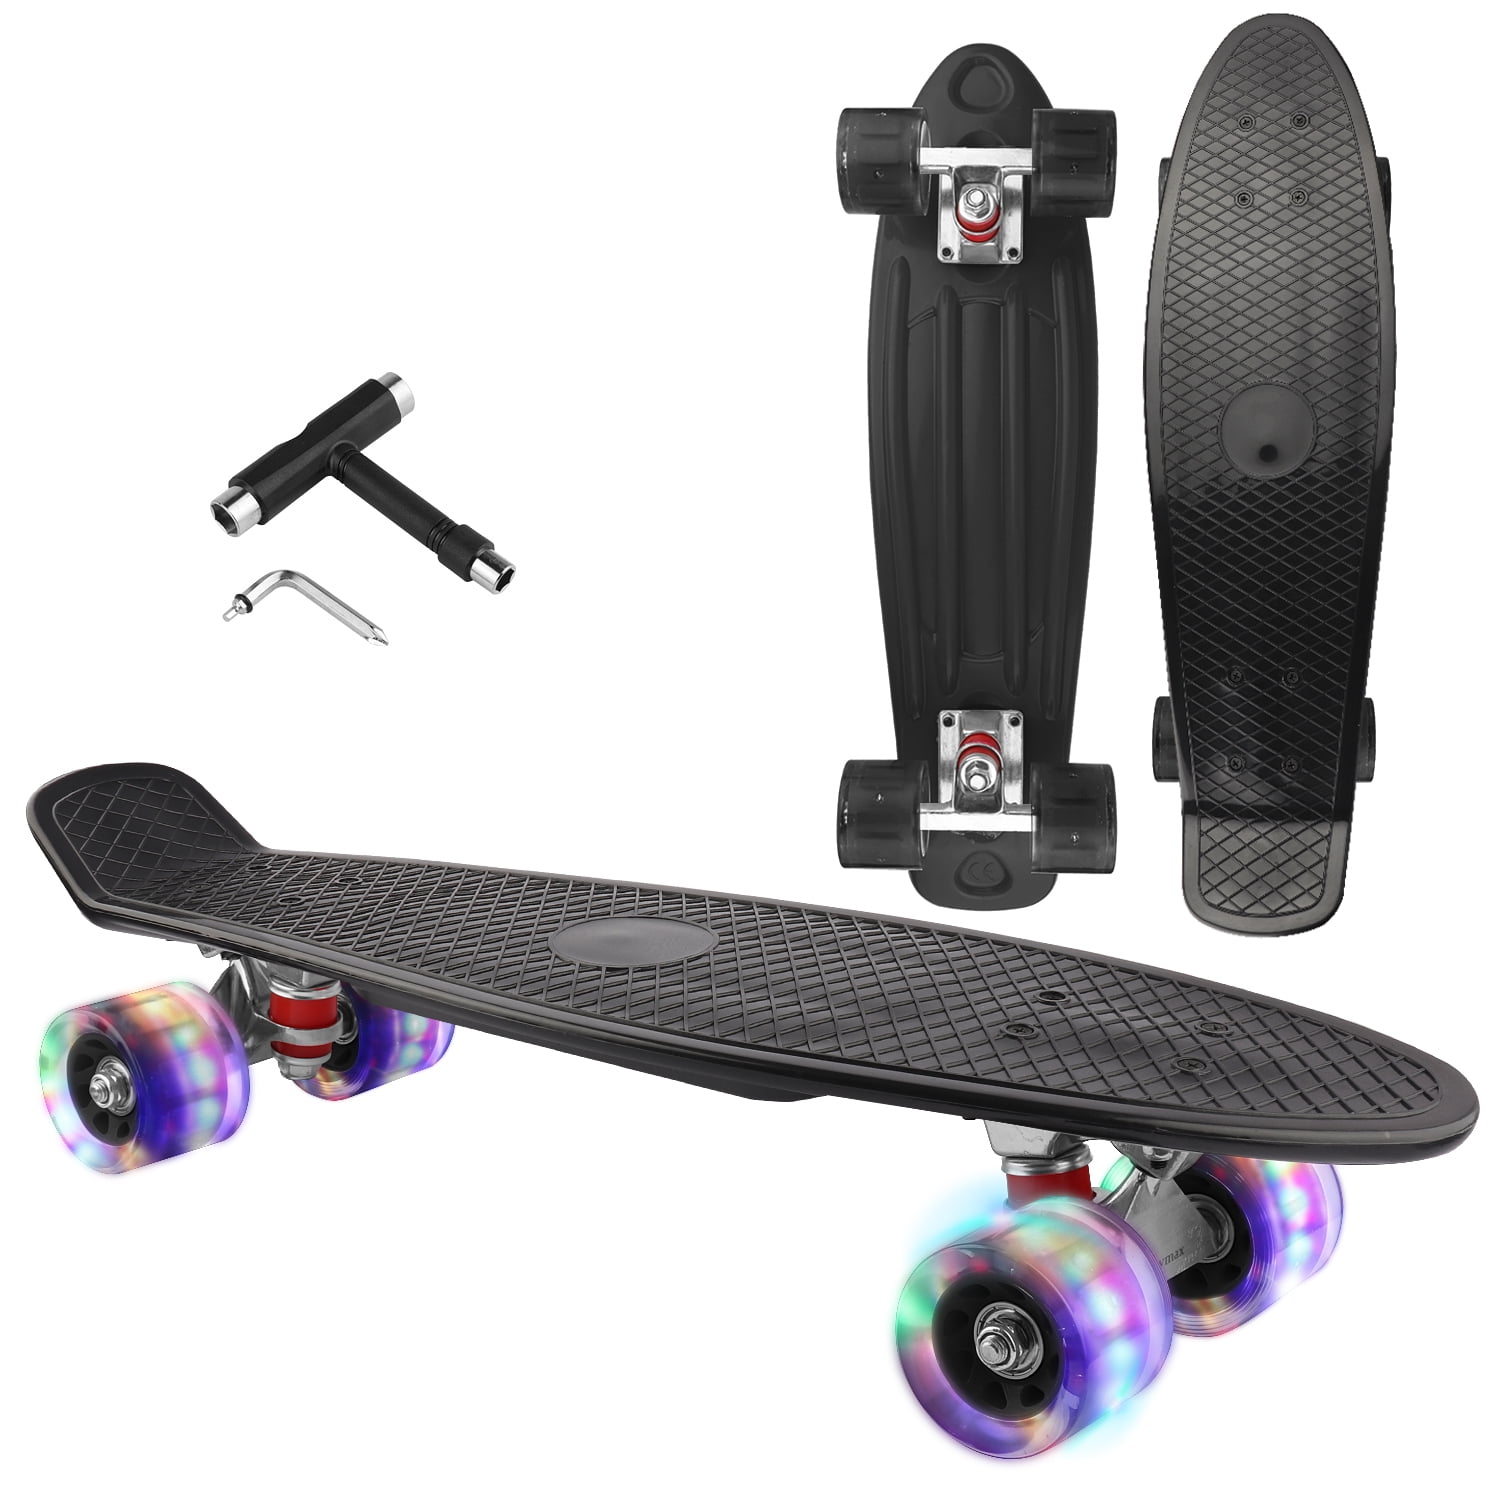 Caroma Skateboards für Anfänger 22 Zoll/55cm komplettes Mini Cruiser Skateboard mit LED Light Up Wheels für Kinder Teens Girls Boys